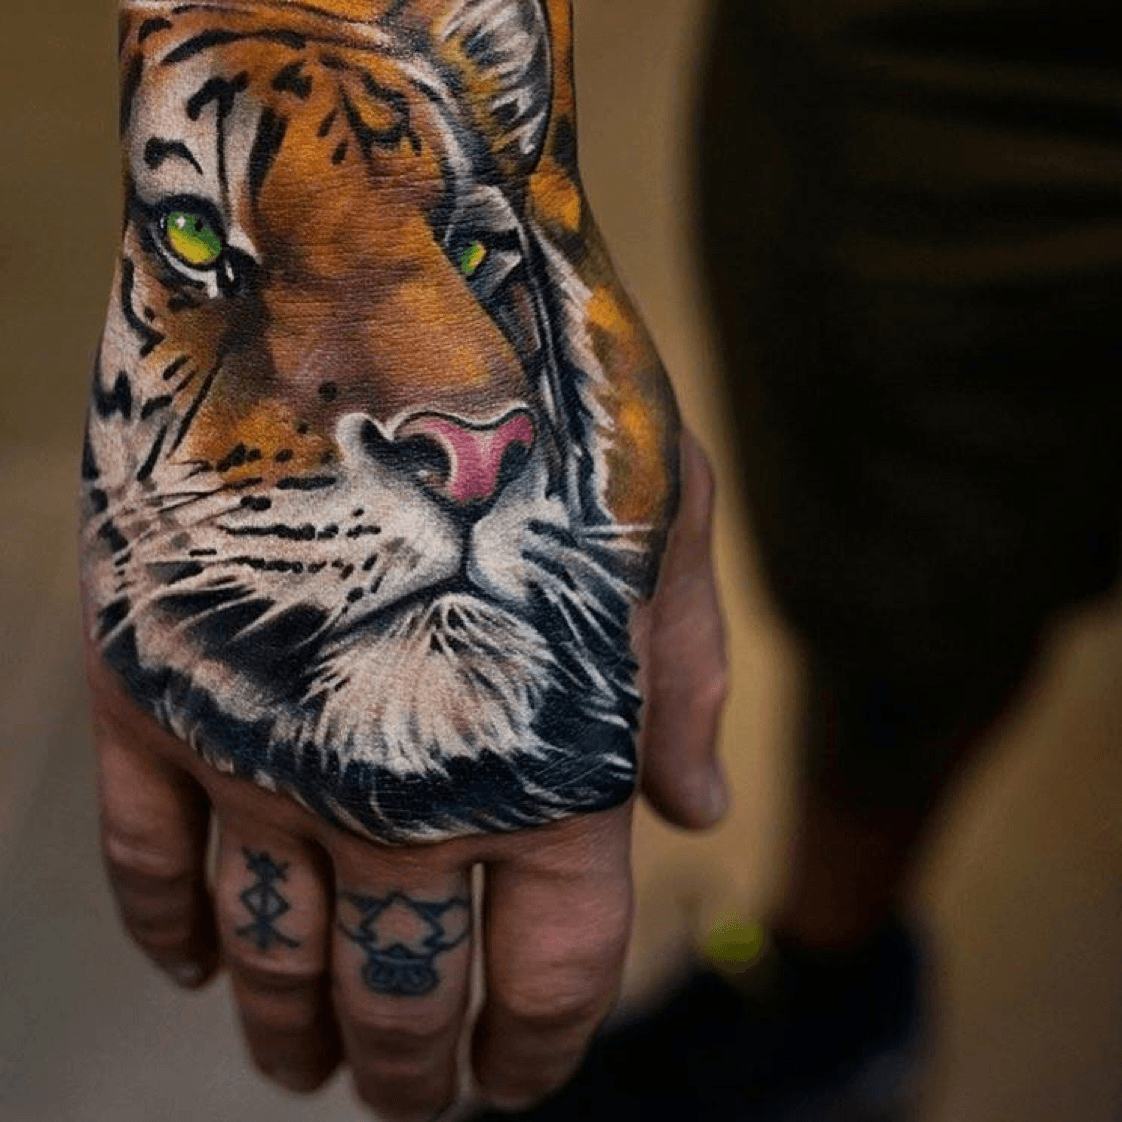 Tattoo uploaded by Jorge Iván Aguas • Tigre mano • Tattoodo